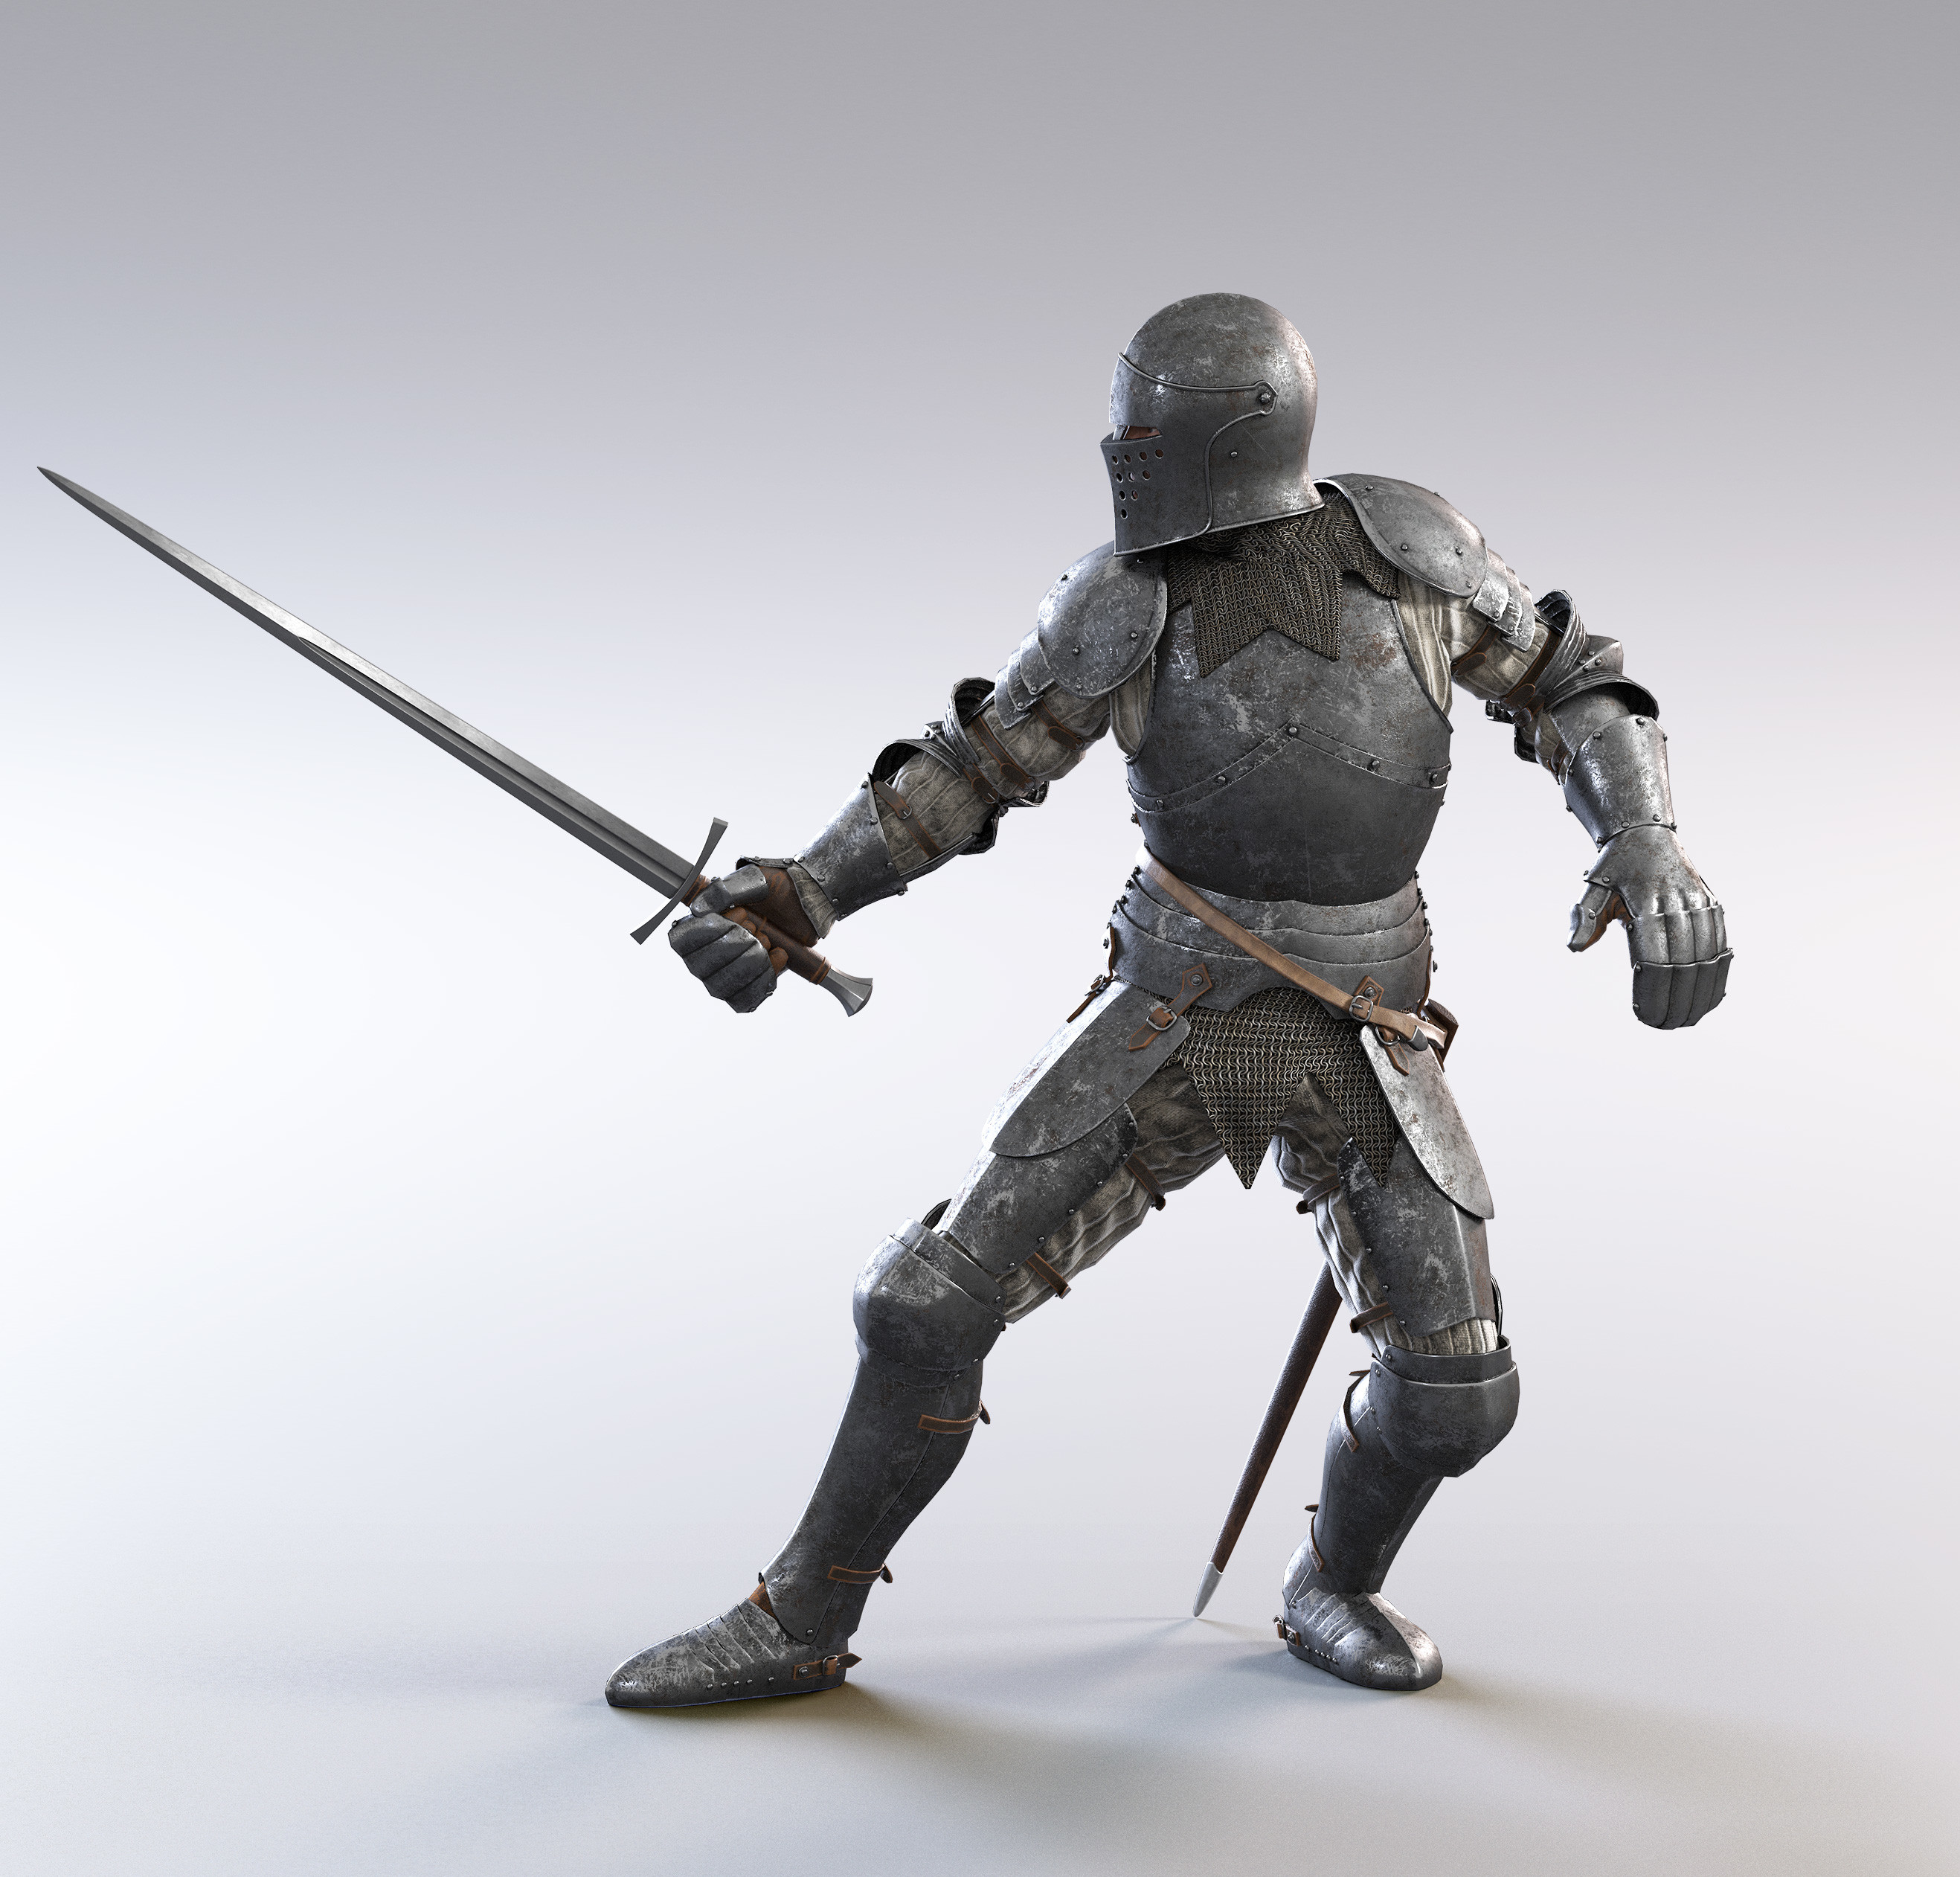 https://cdnb.artstation.com/p/assets/images/images/010/783/401/4k/henning-kleist-3d-fullplate-knight-model-z.jpg?1526224317